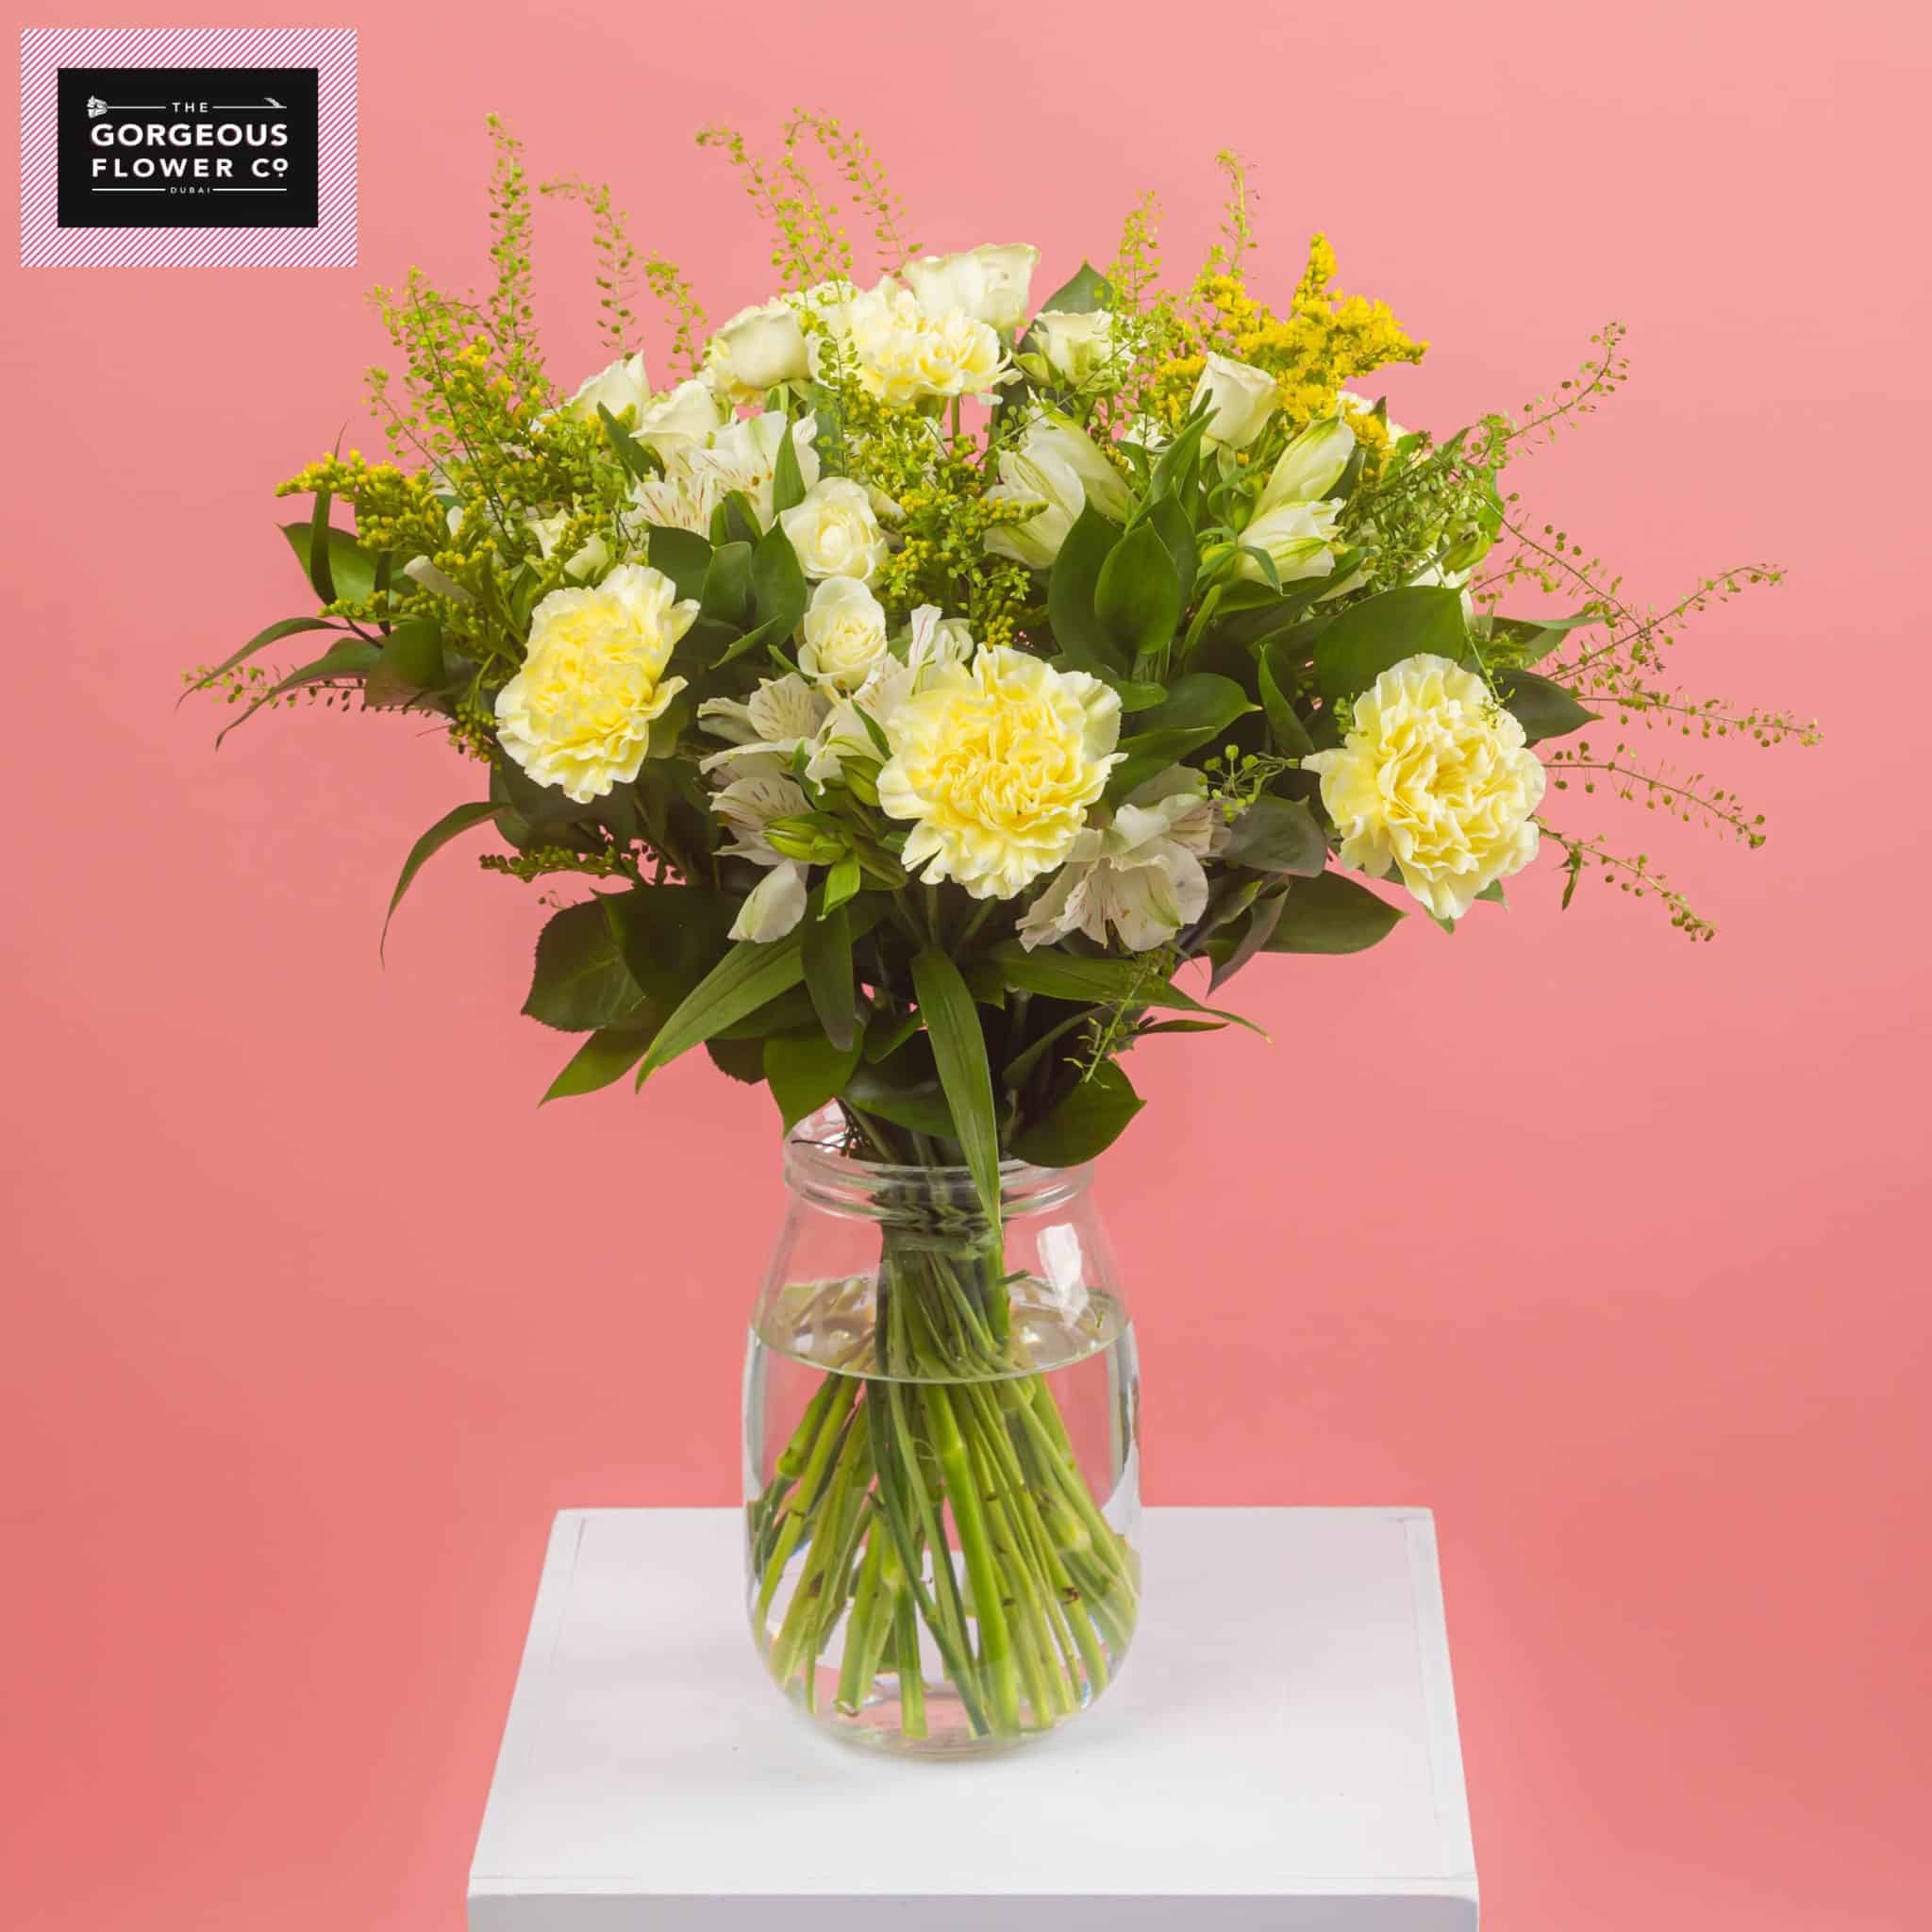 Gorgeous Yellow Jar - The Gorgeous Flower Company